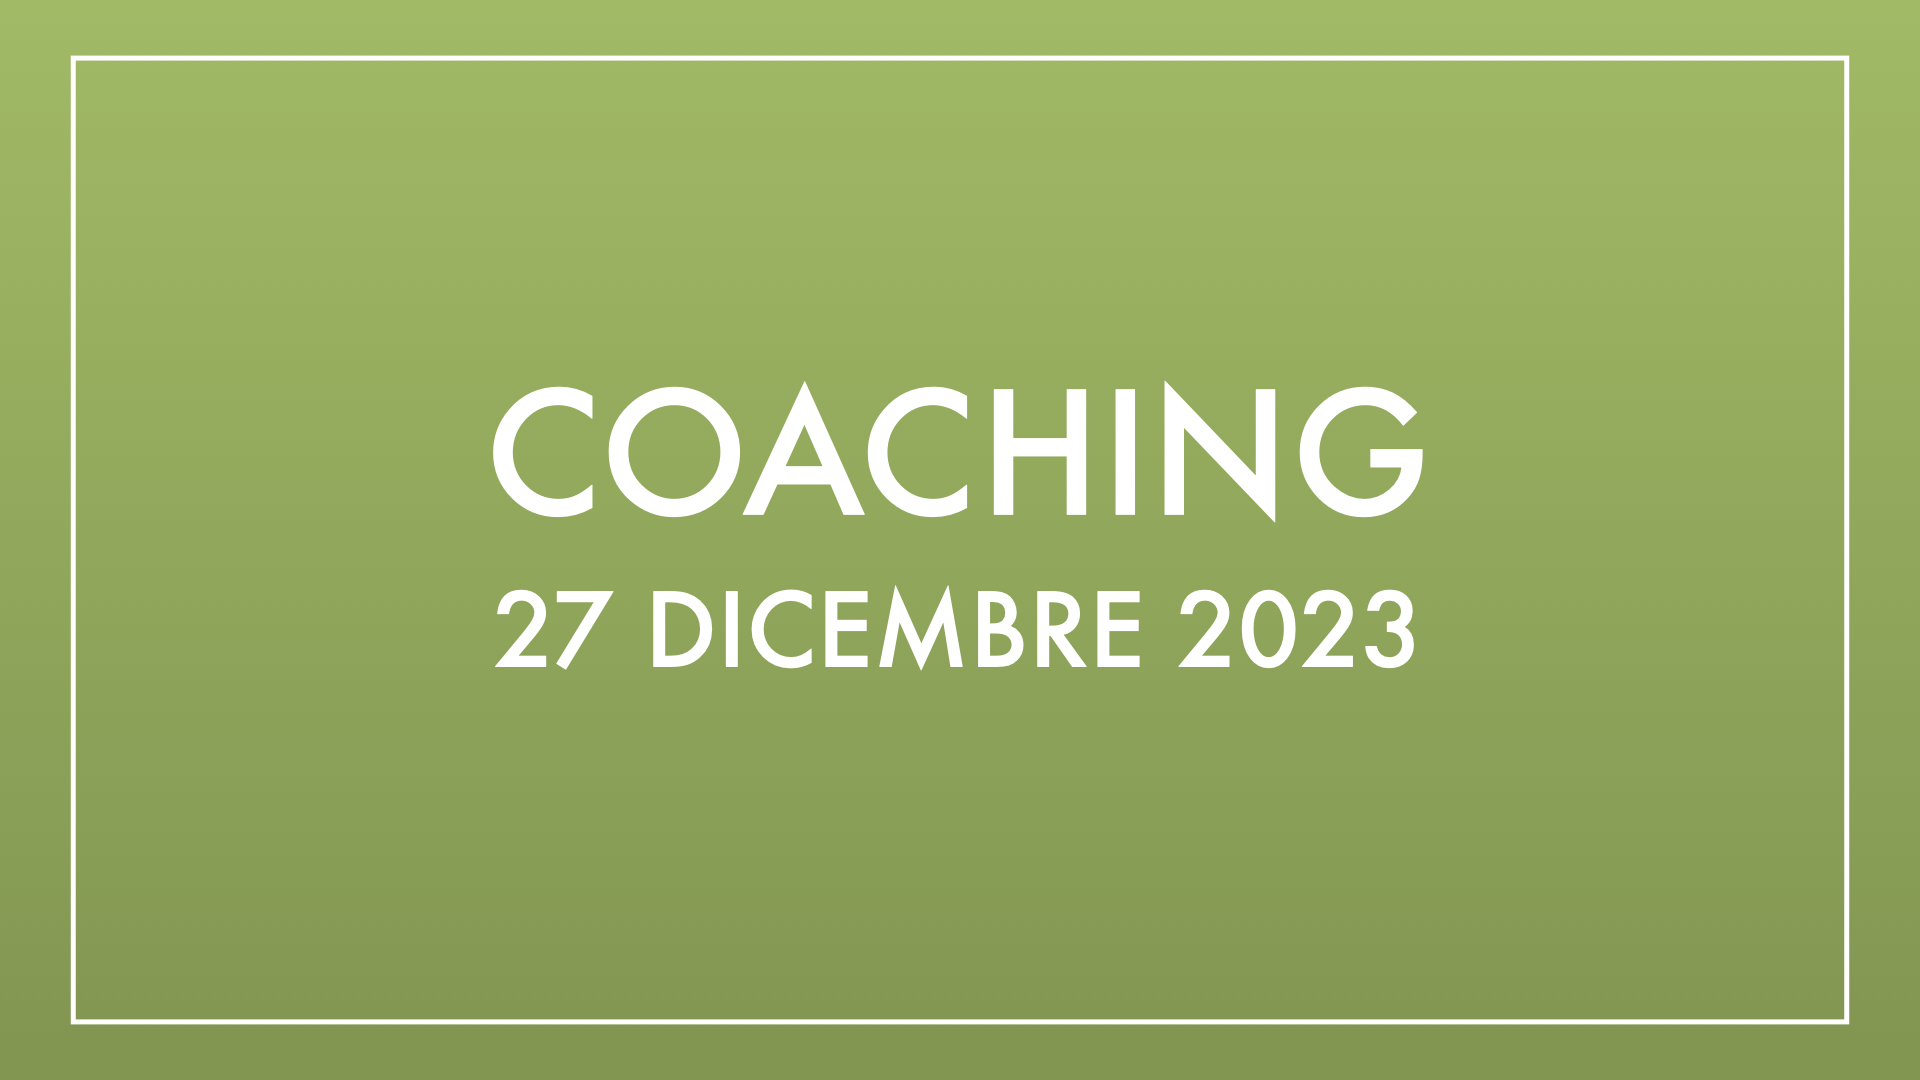 Coaching 27 dicembre 2023